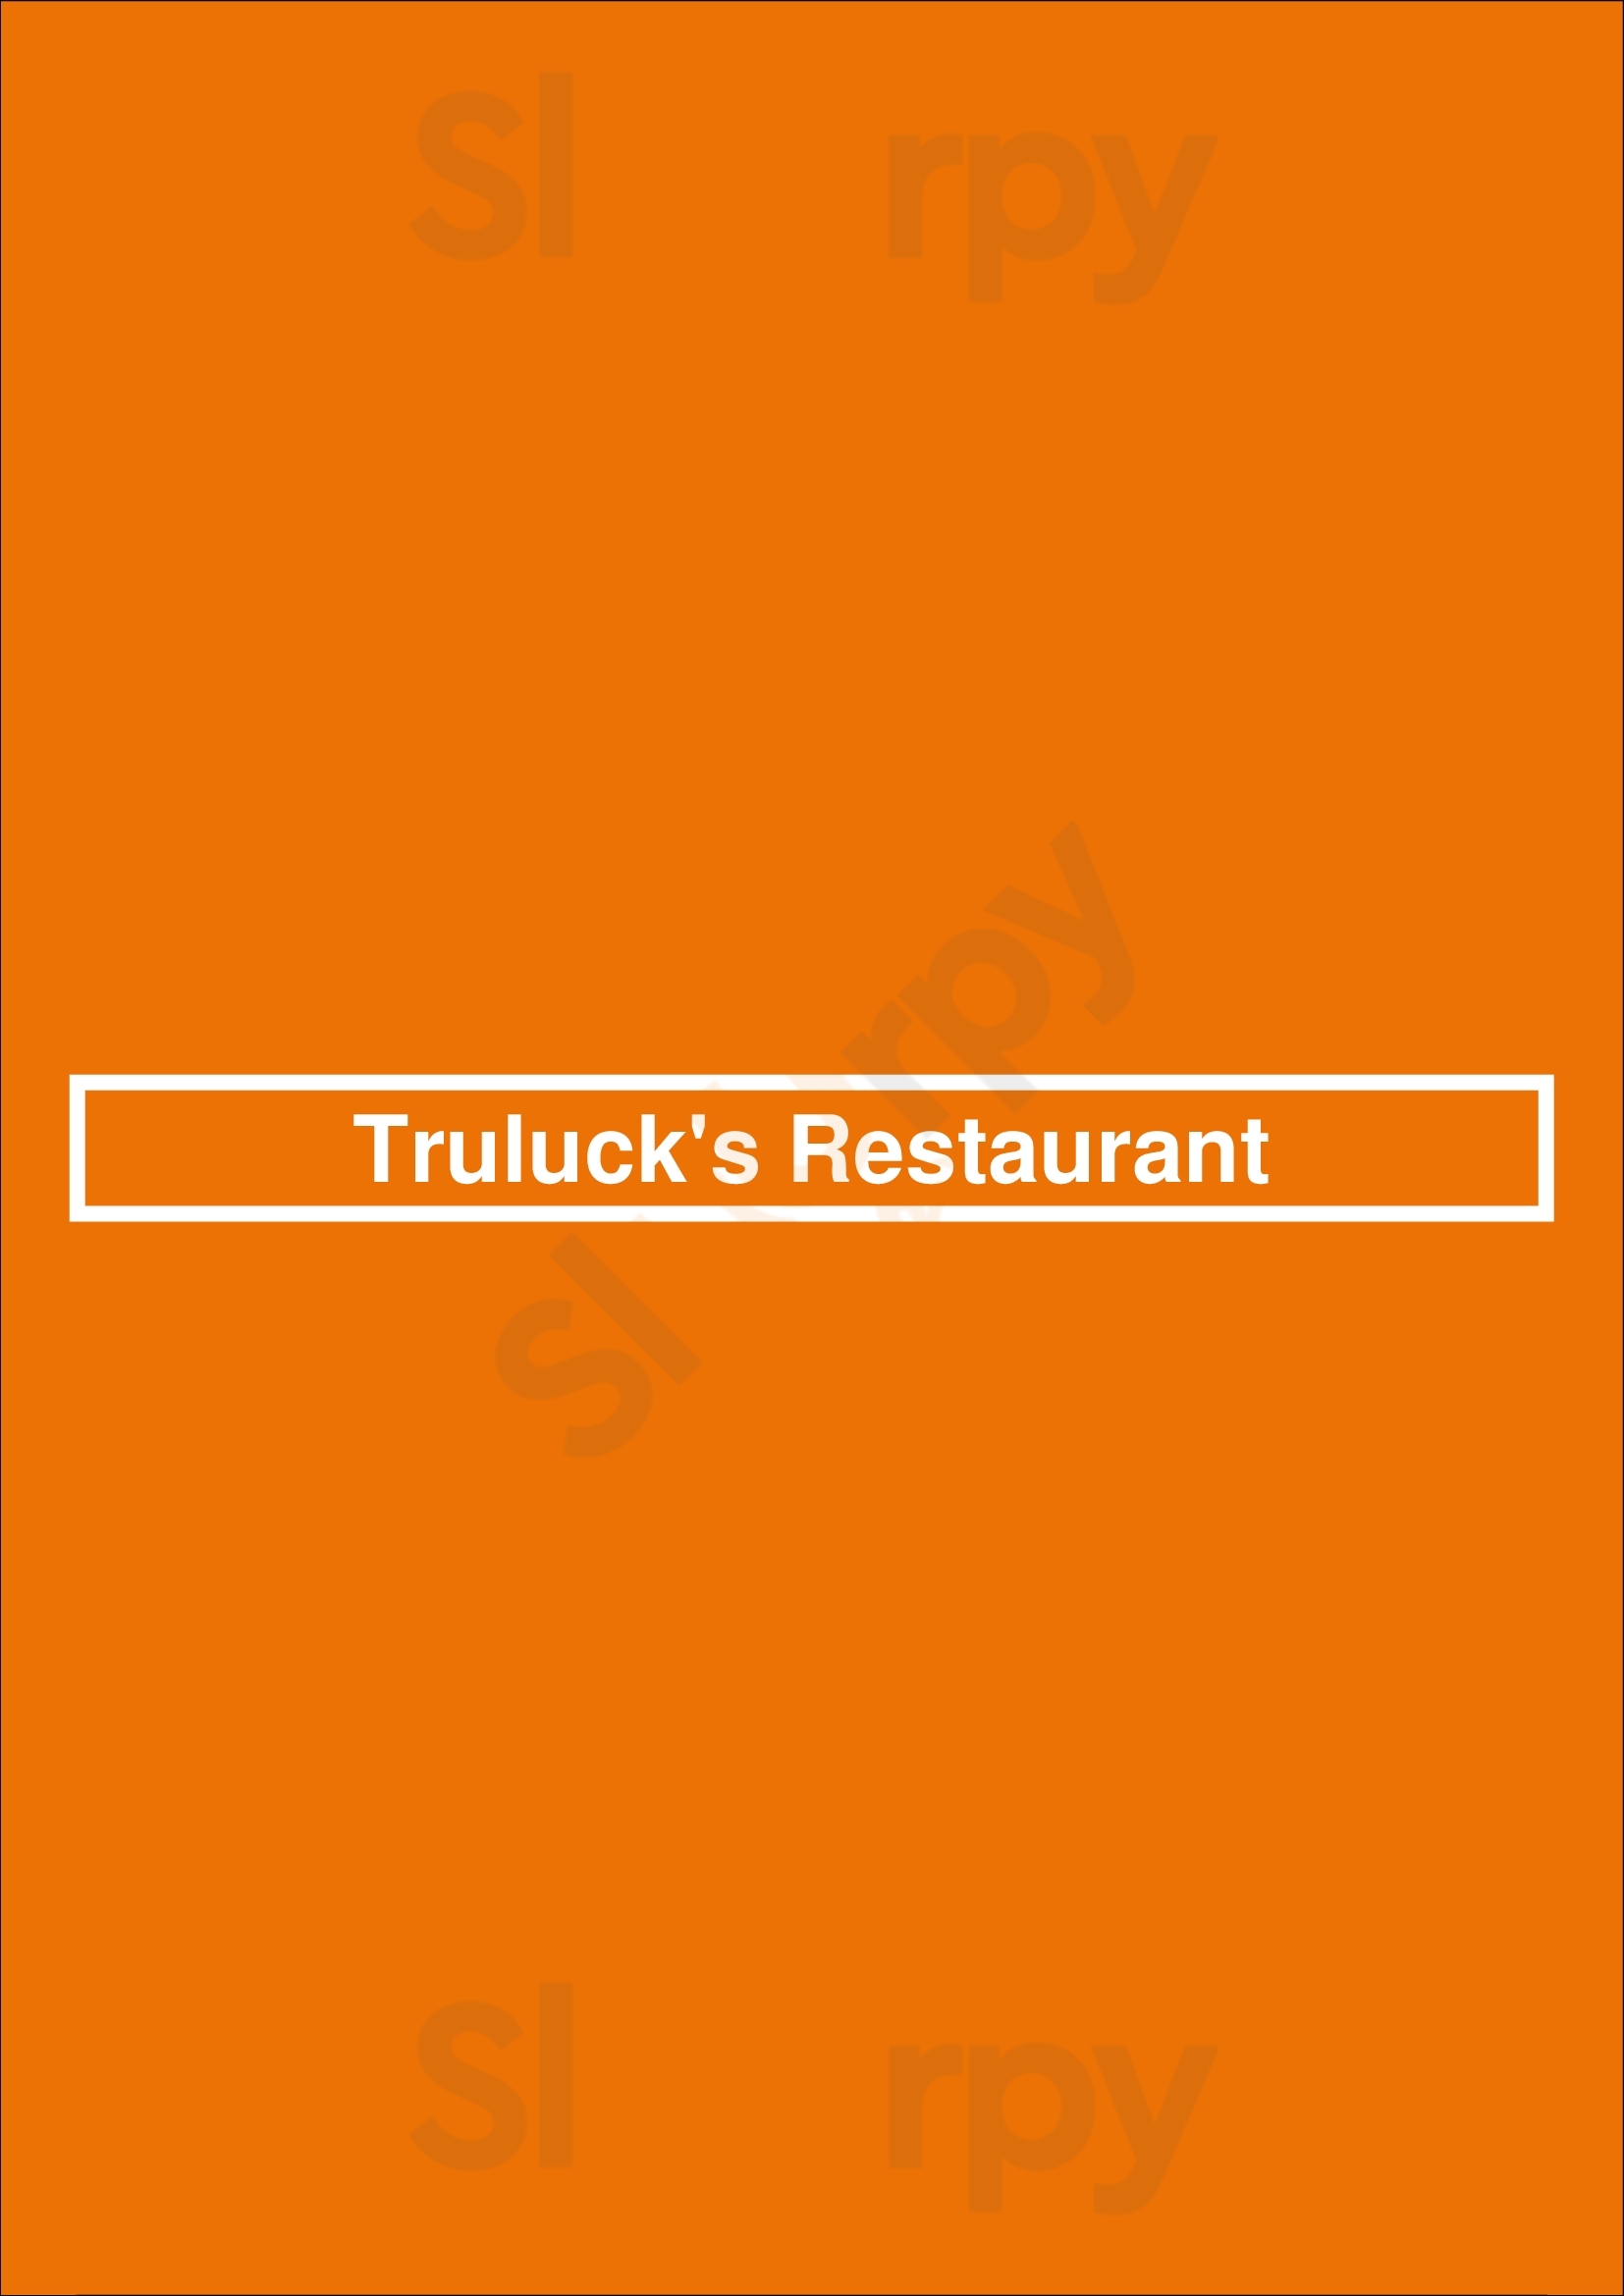 Truluck's Restaurant Fort Lauderdale Menu - 1